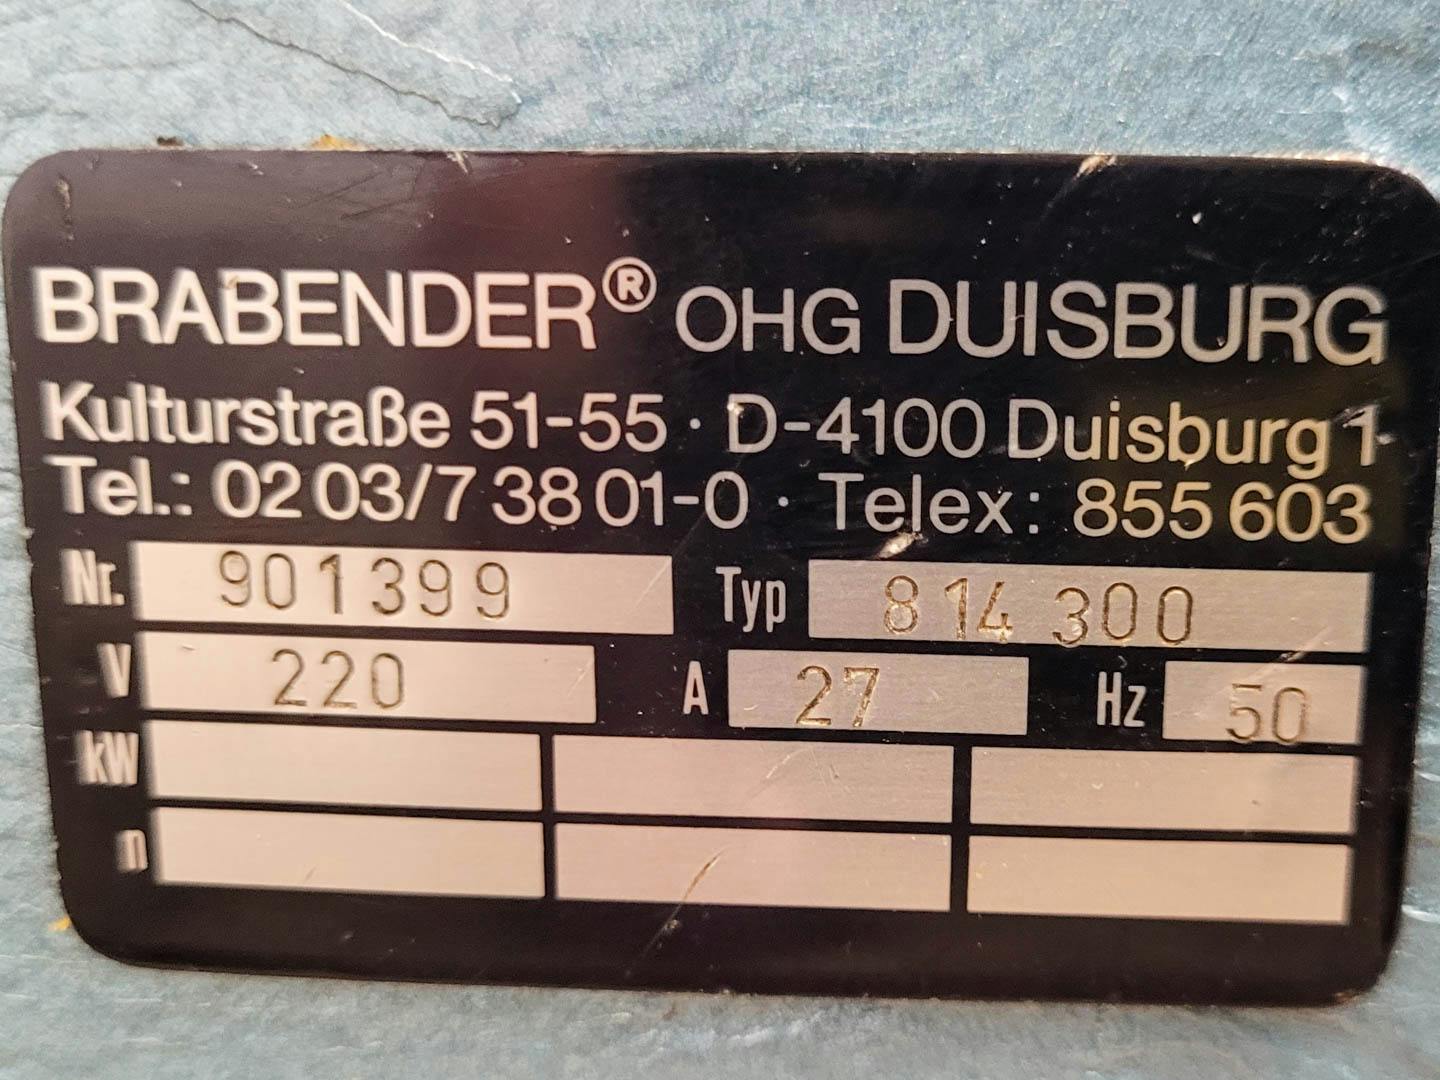 Brabender Plasti-Corder PL2000, Eurotherm Type 808 - Single screw extruder - image 11